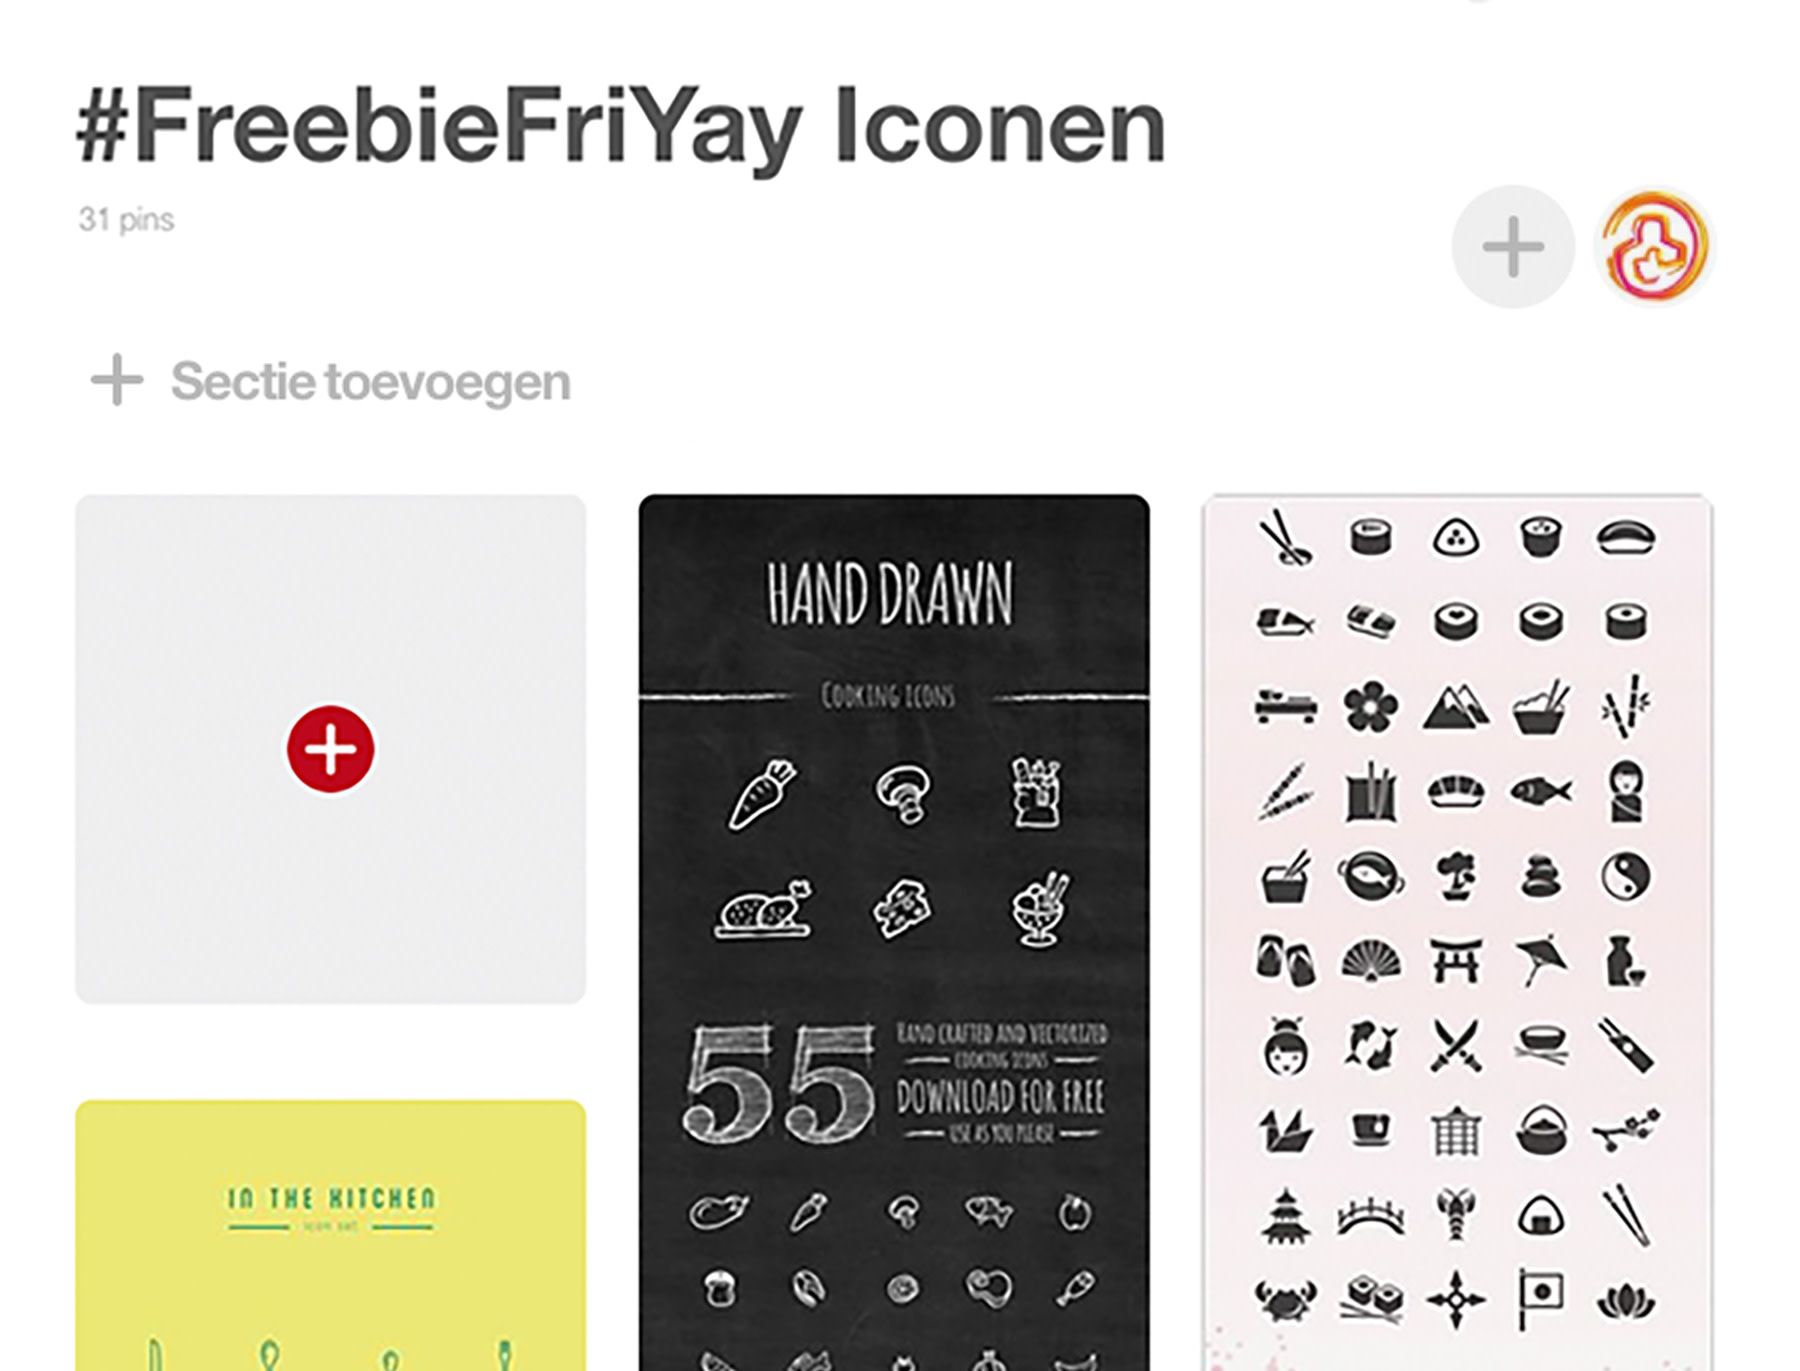 FreebieFriyay #7 - Iconen op Pinterest